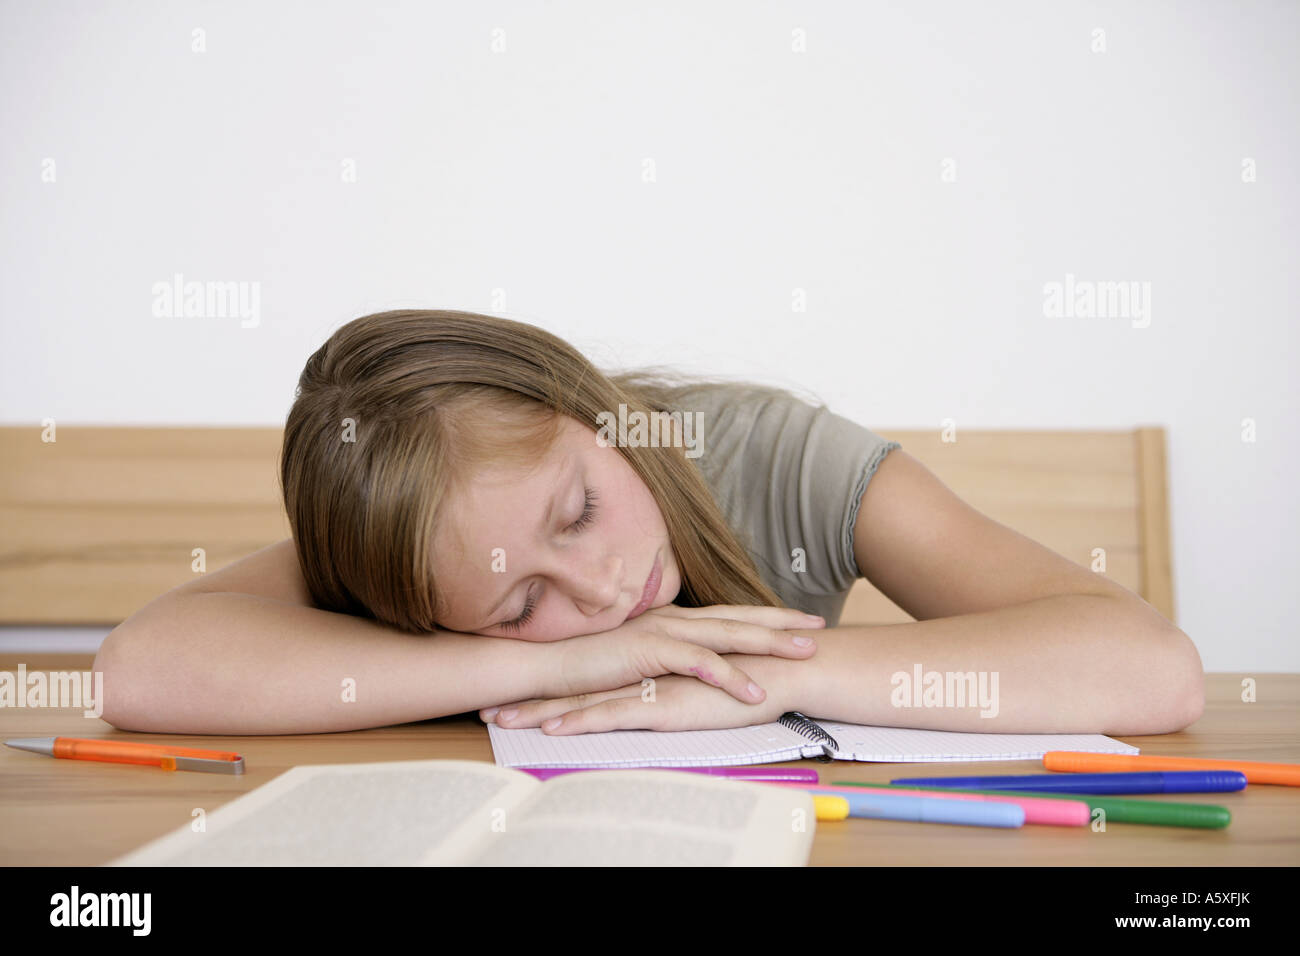 Girl sleeping on desk Banque D'Images